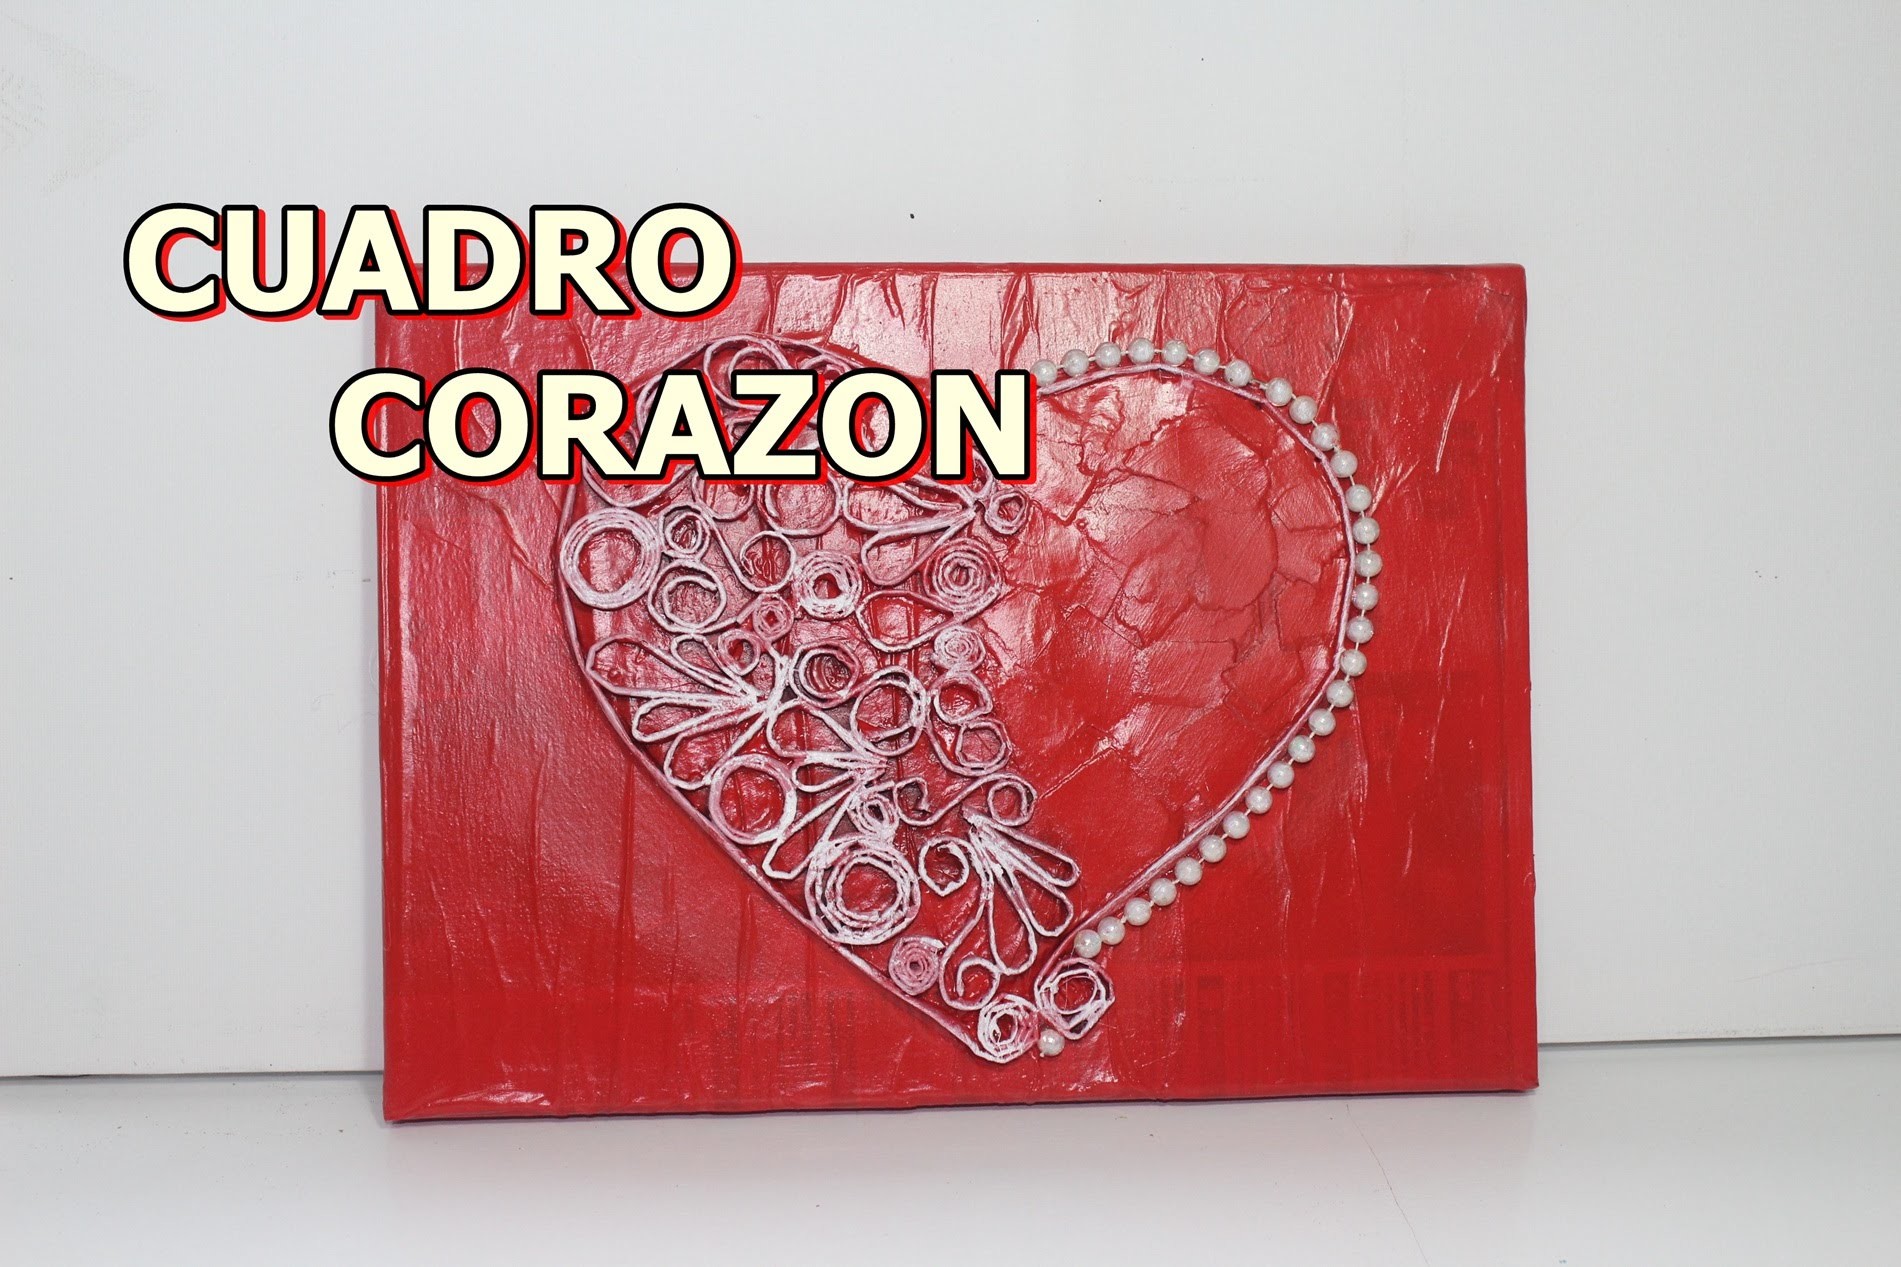 Cuadro Corazon - TABLE HEART